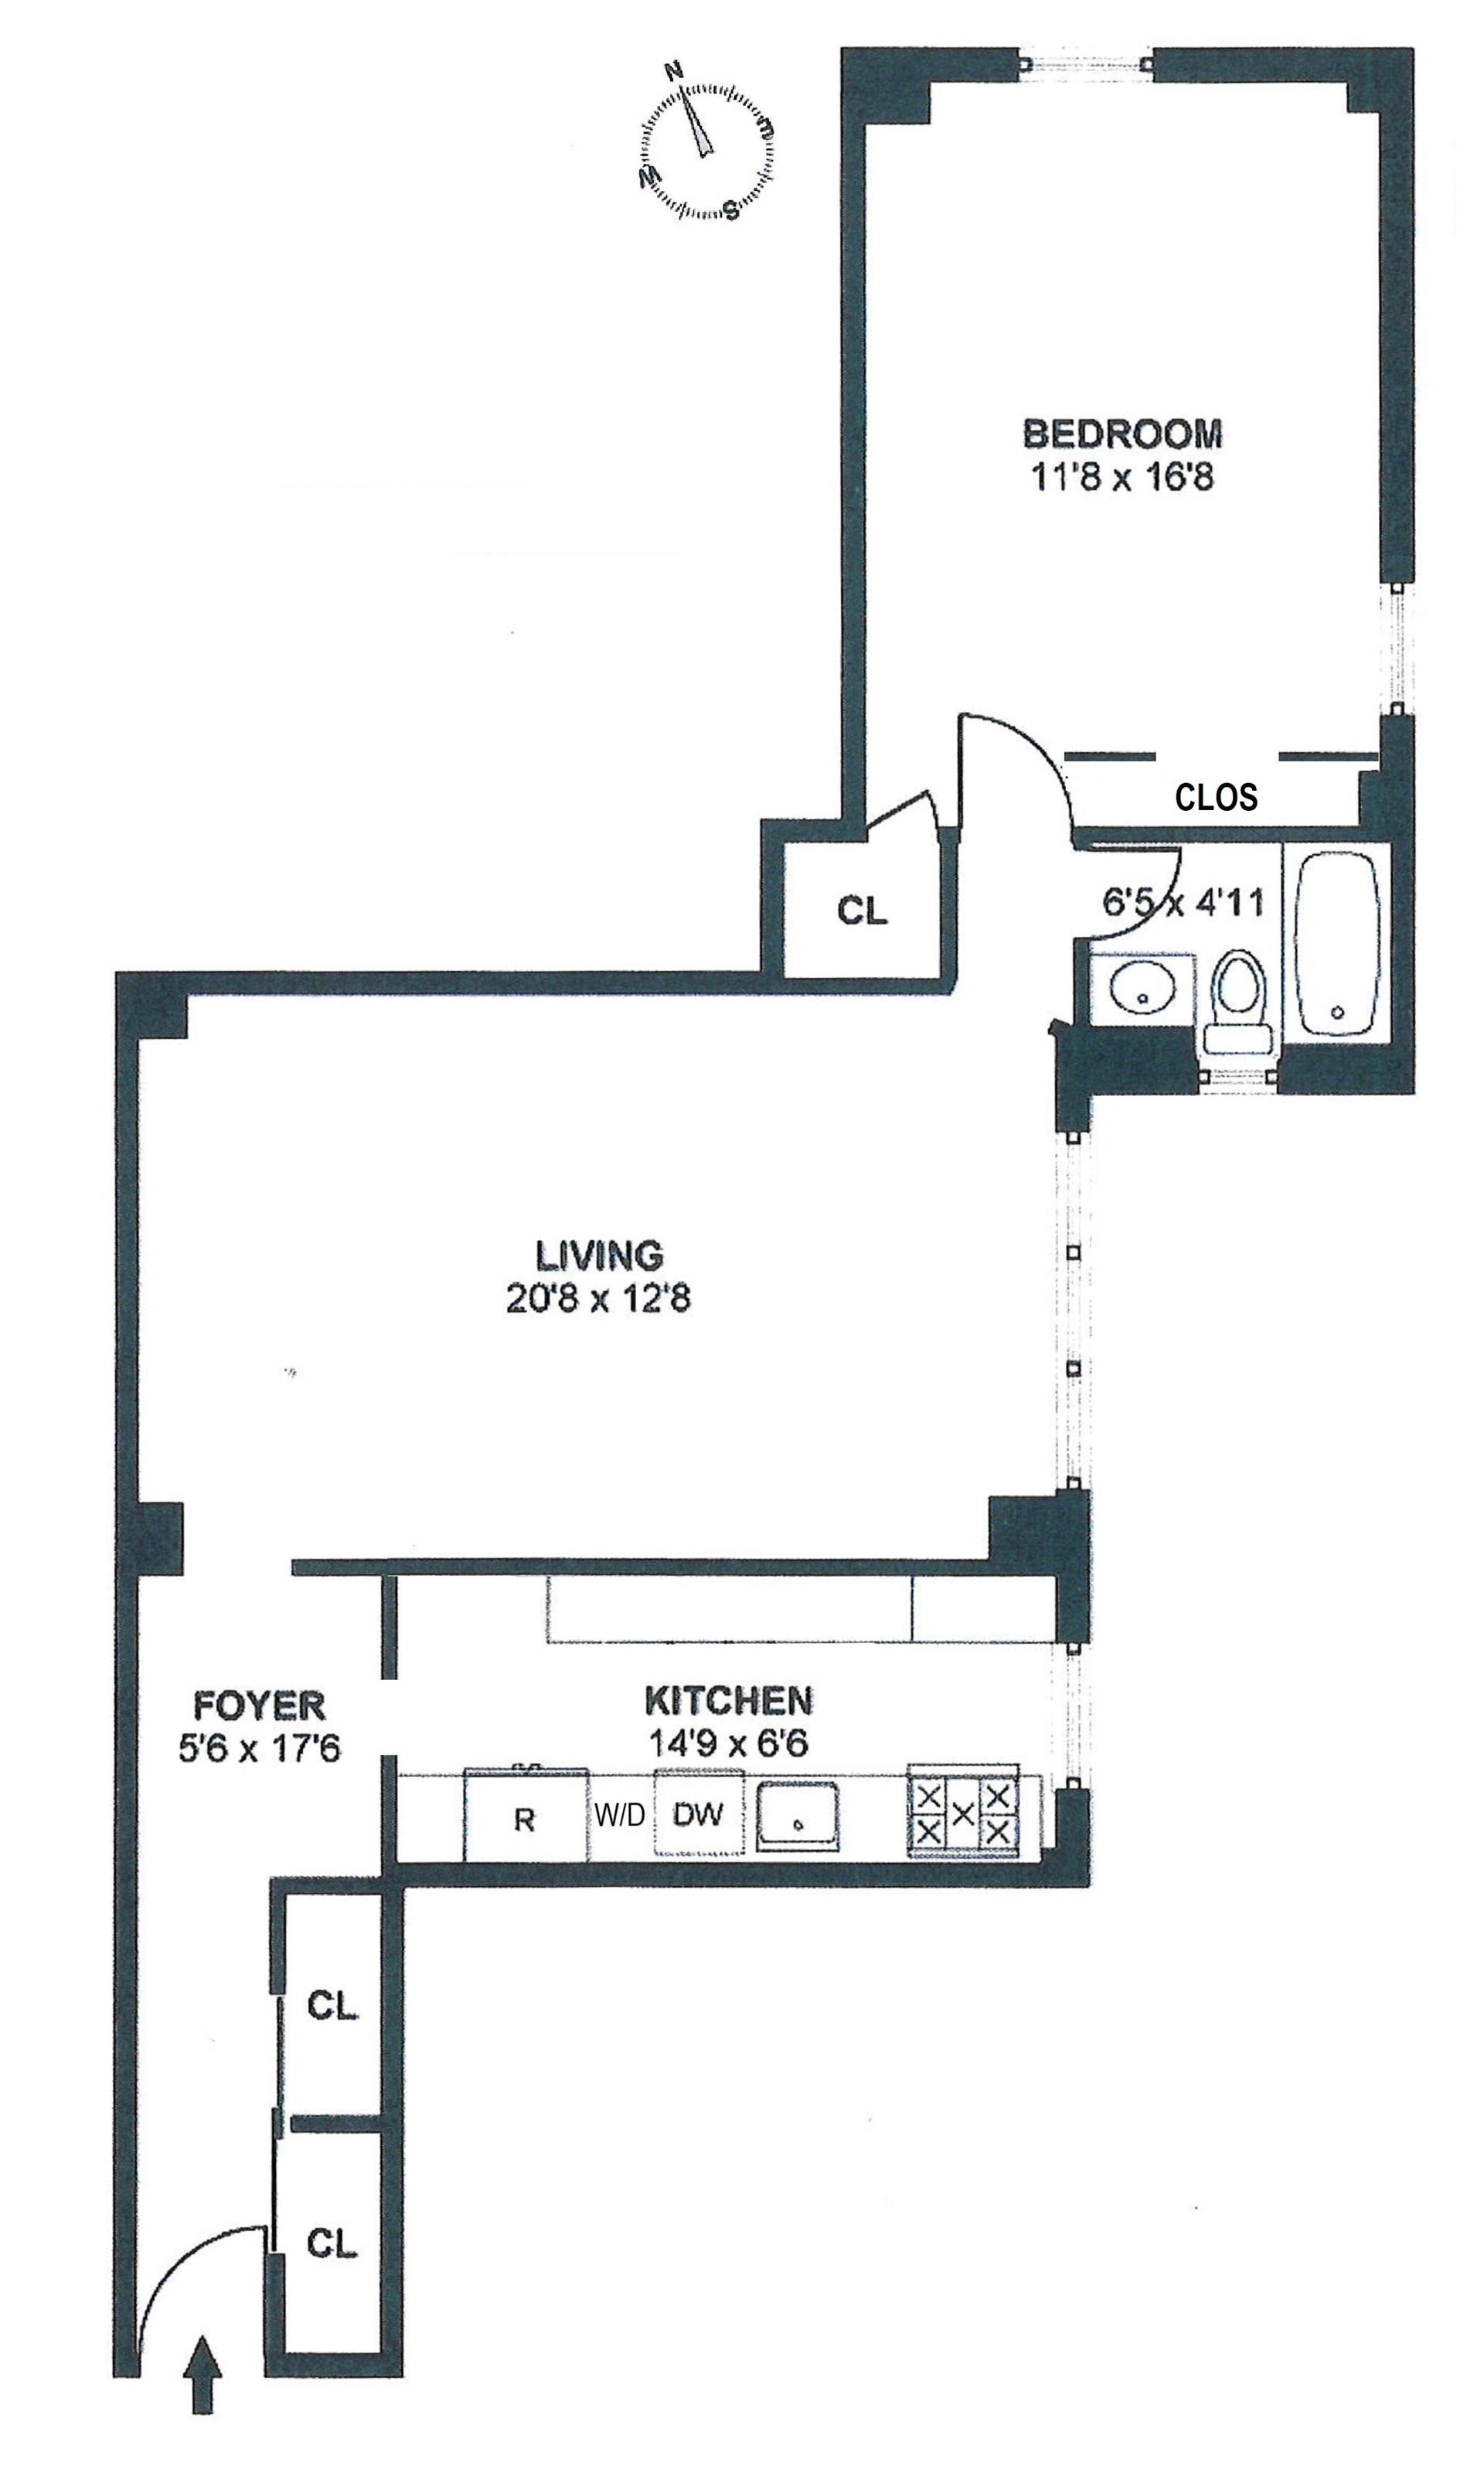 Floorplan for 35 West 92nd Street, 3B